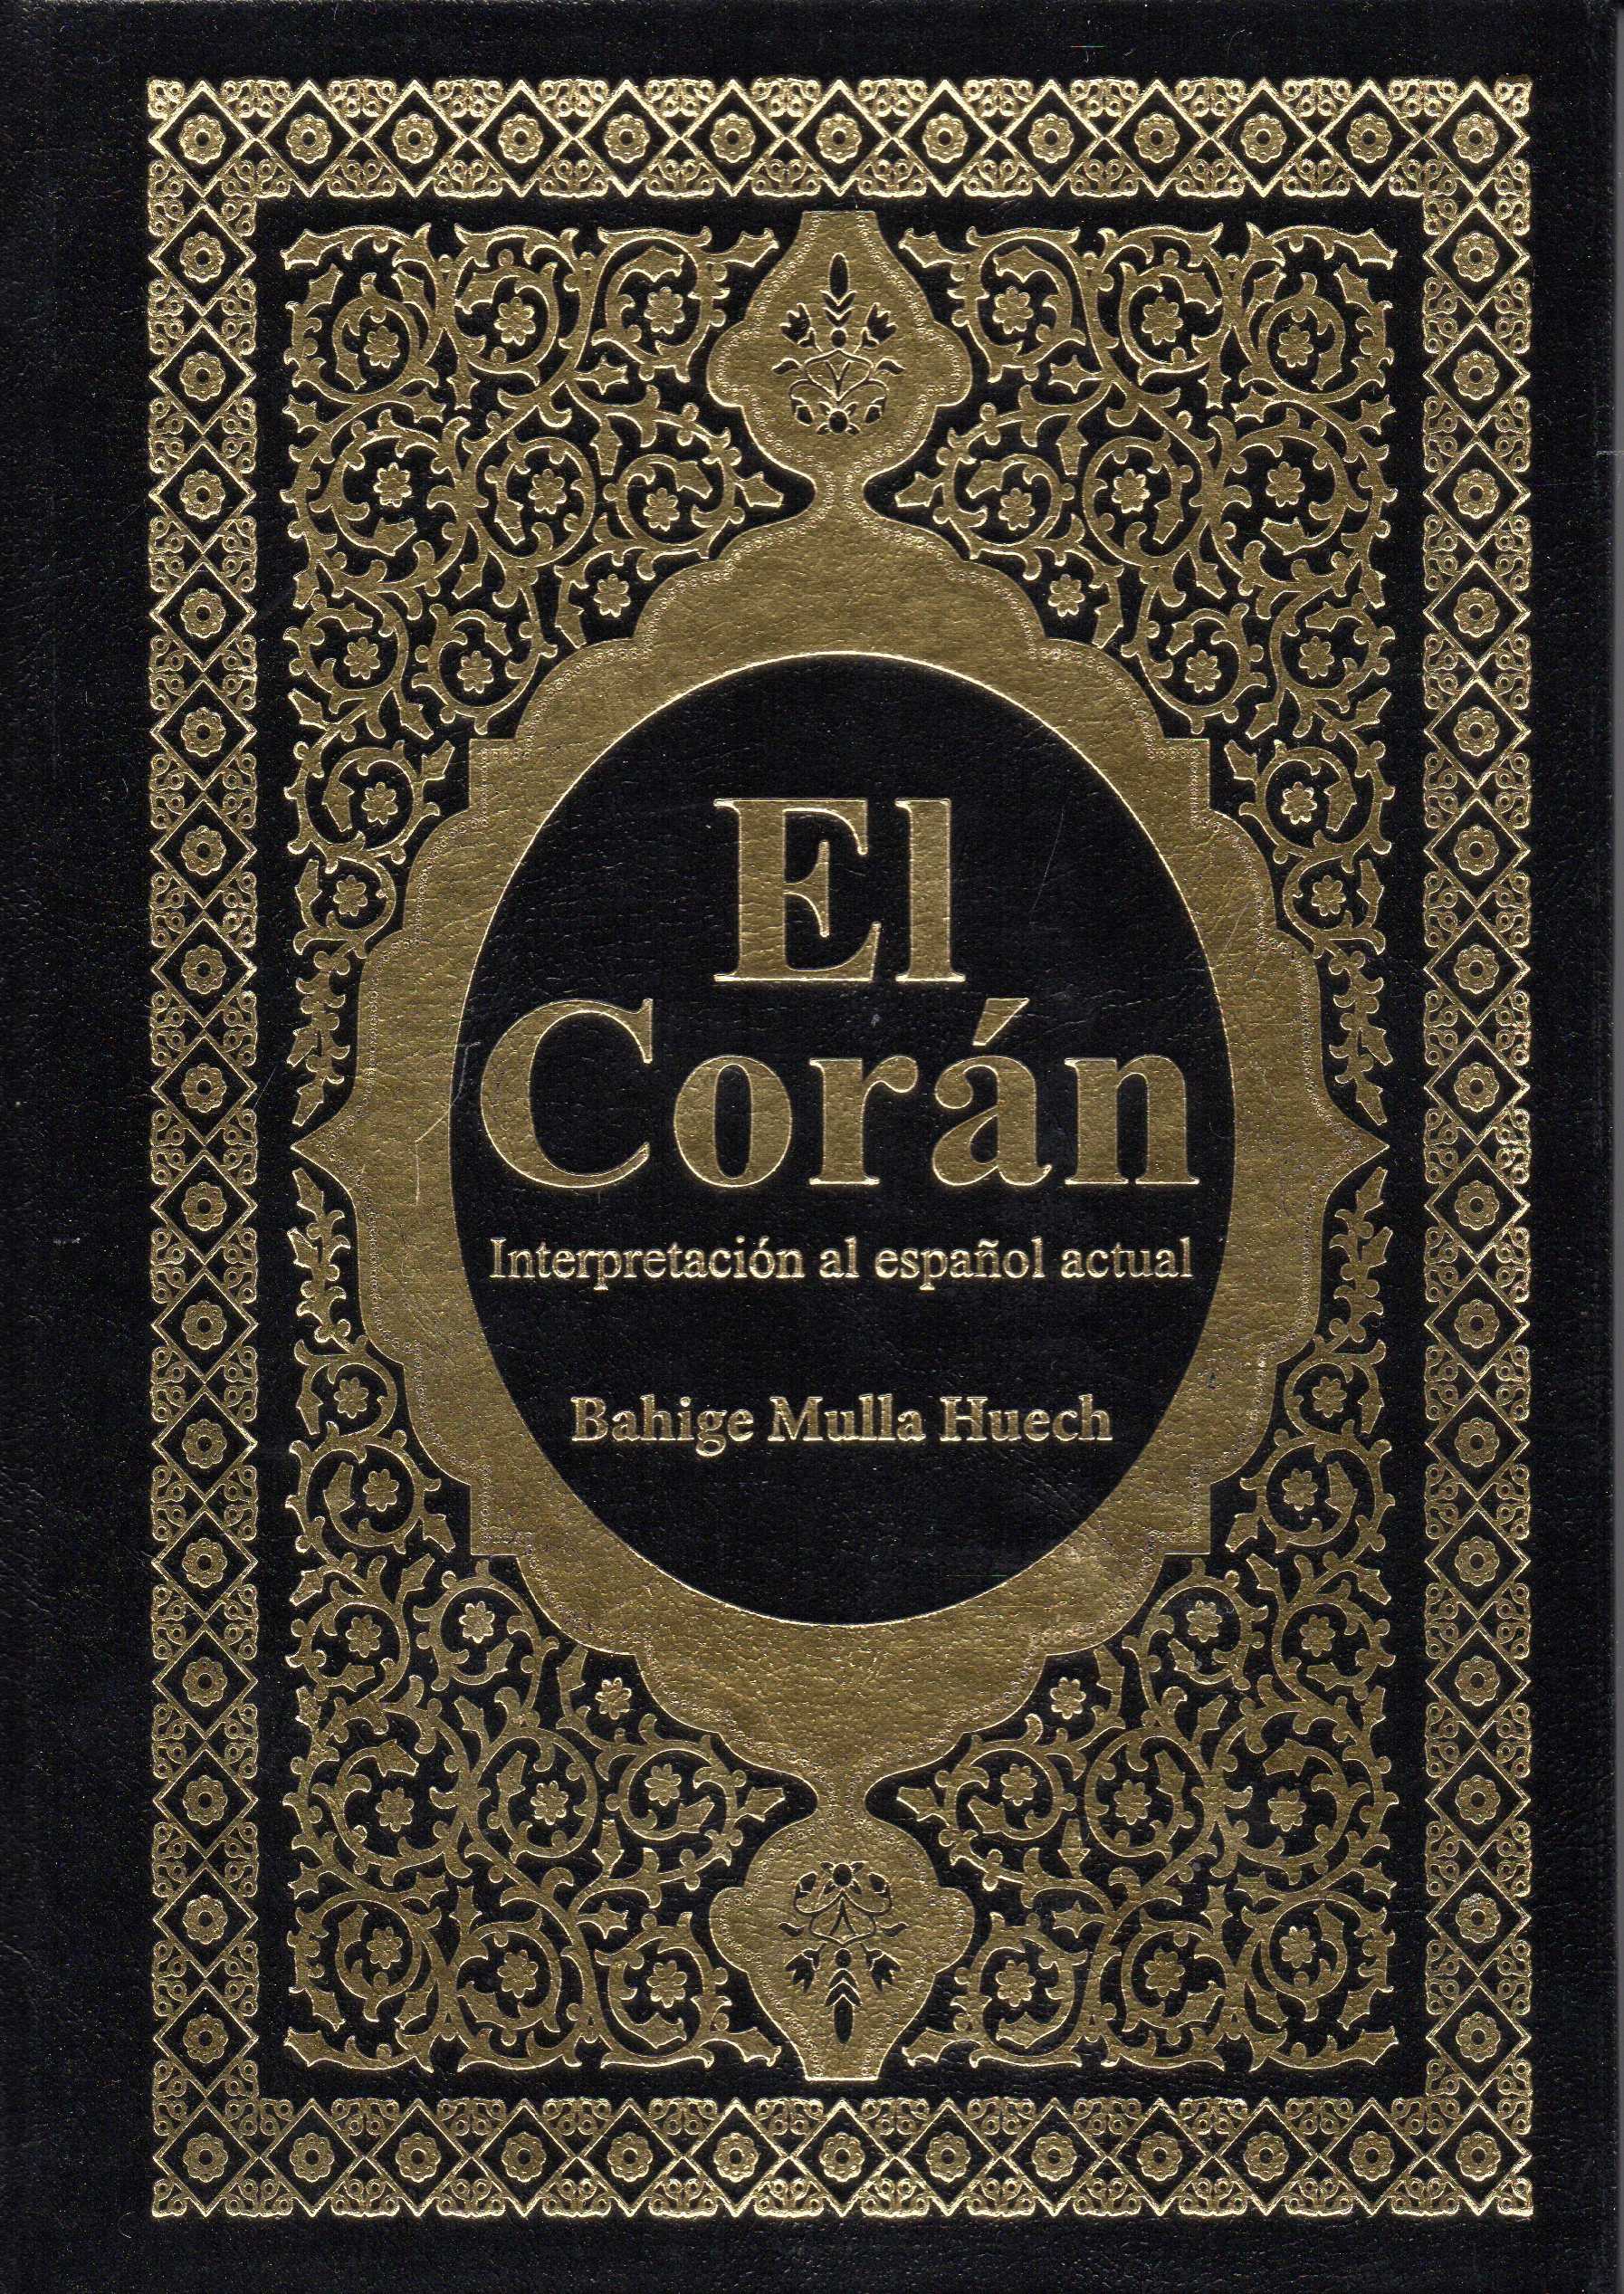 Libro: El Corán - 9788494135385 - Huech, Bahige Mulla - · Marcial Pons  Librero